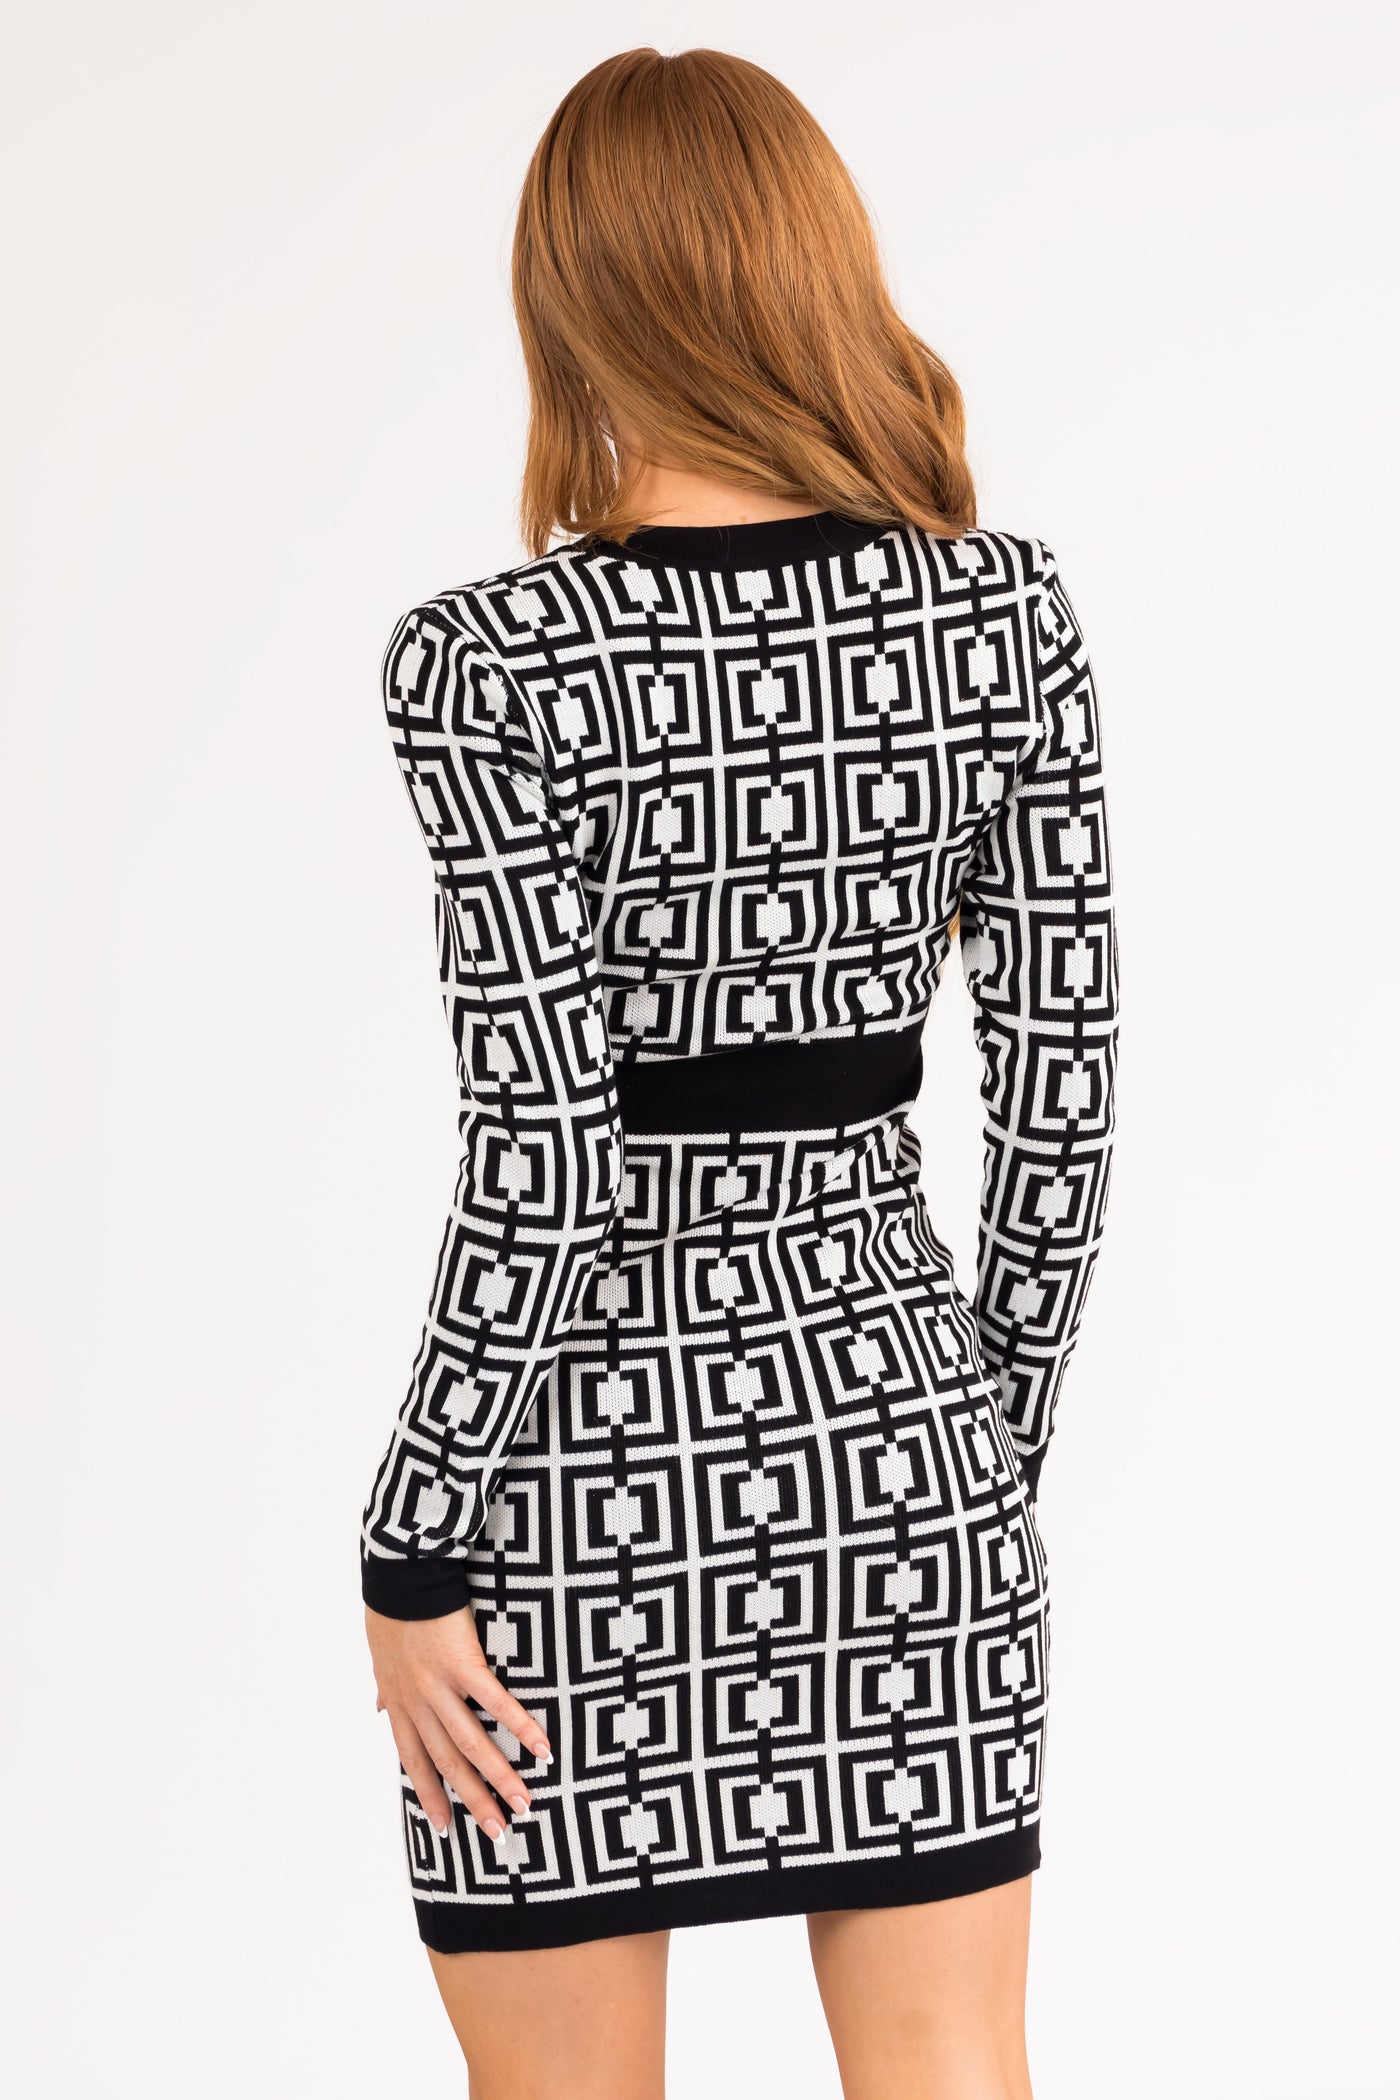 Black and White Geometric Pattern Short Dress